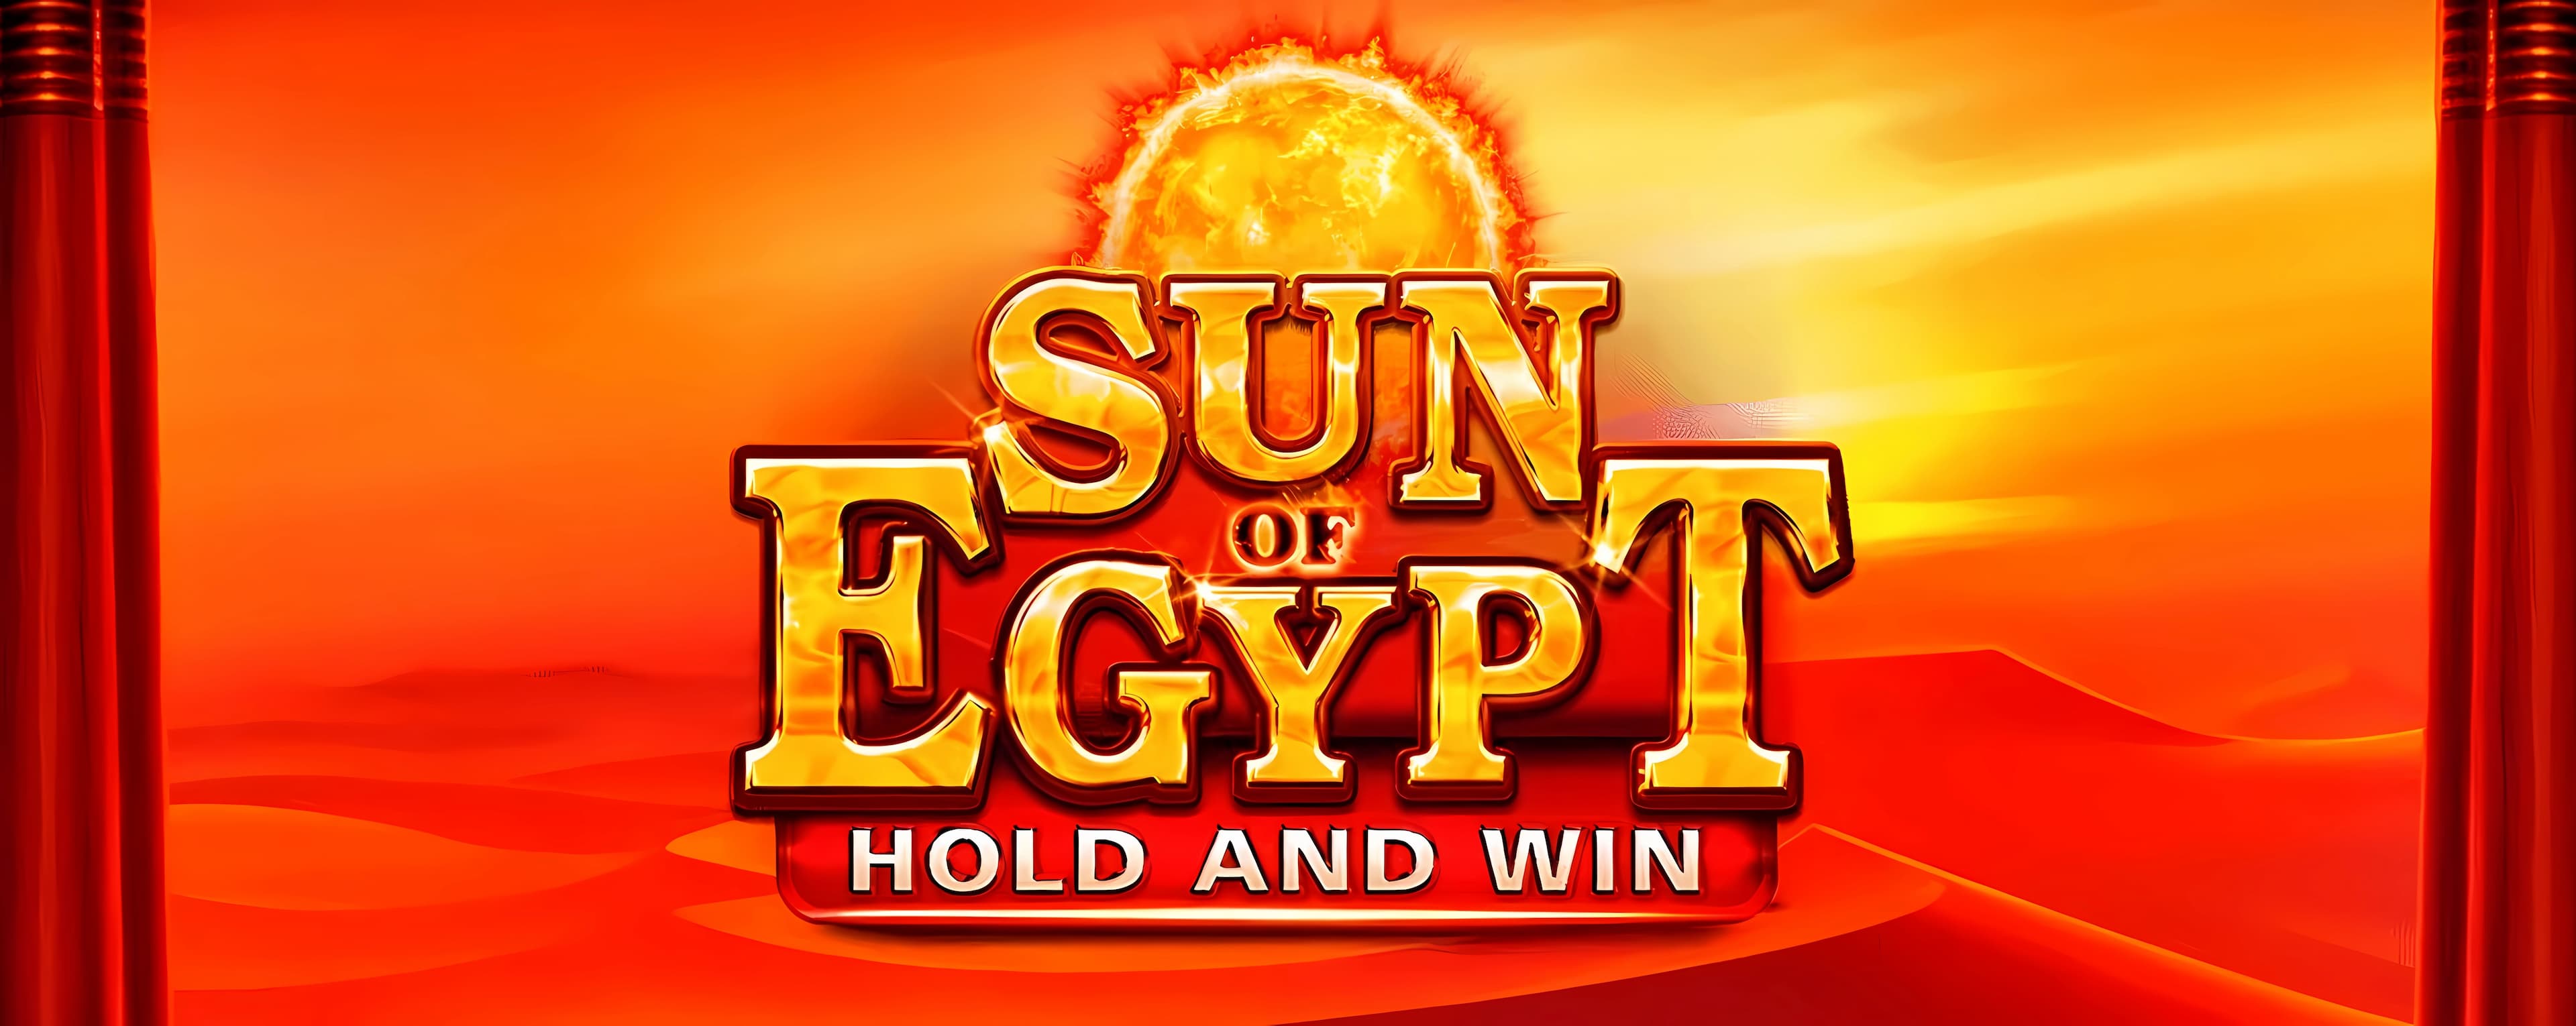 Sun of Egypt cover